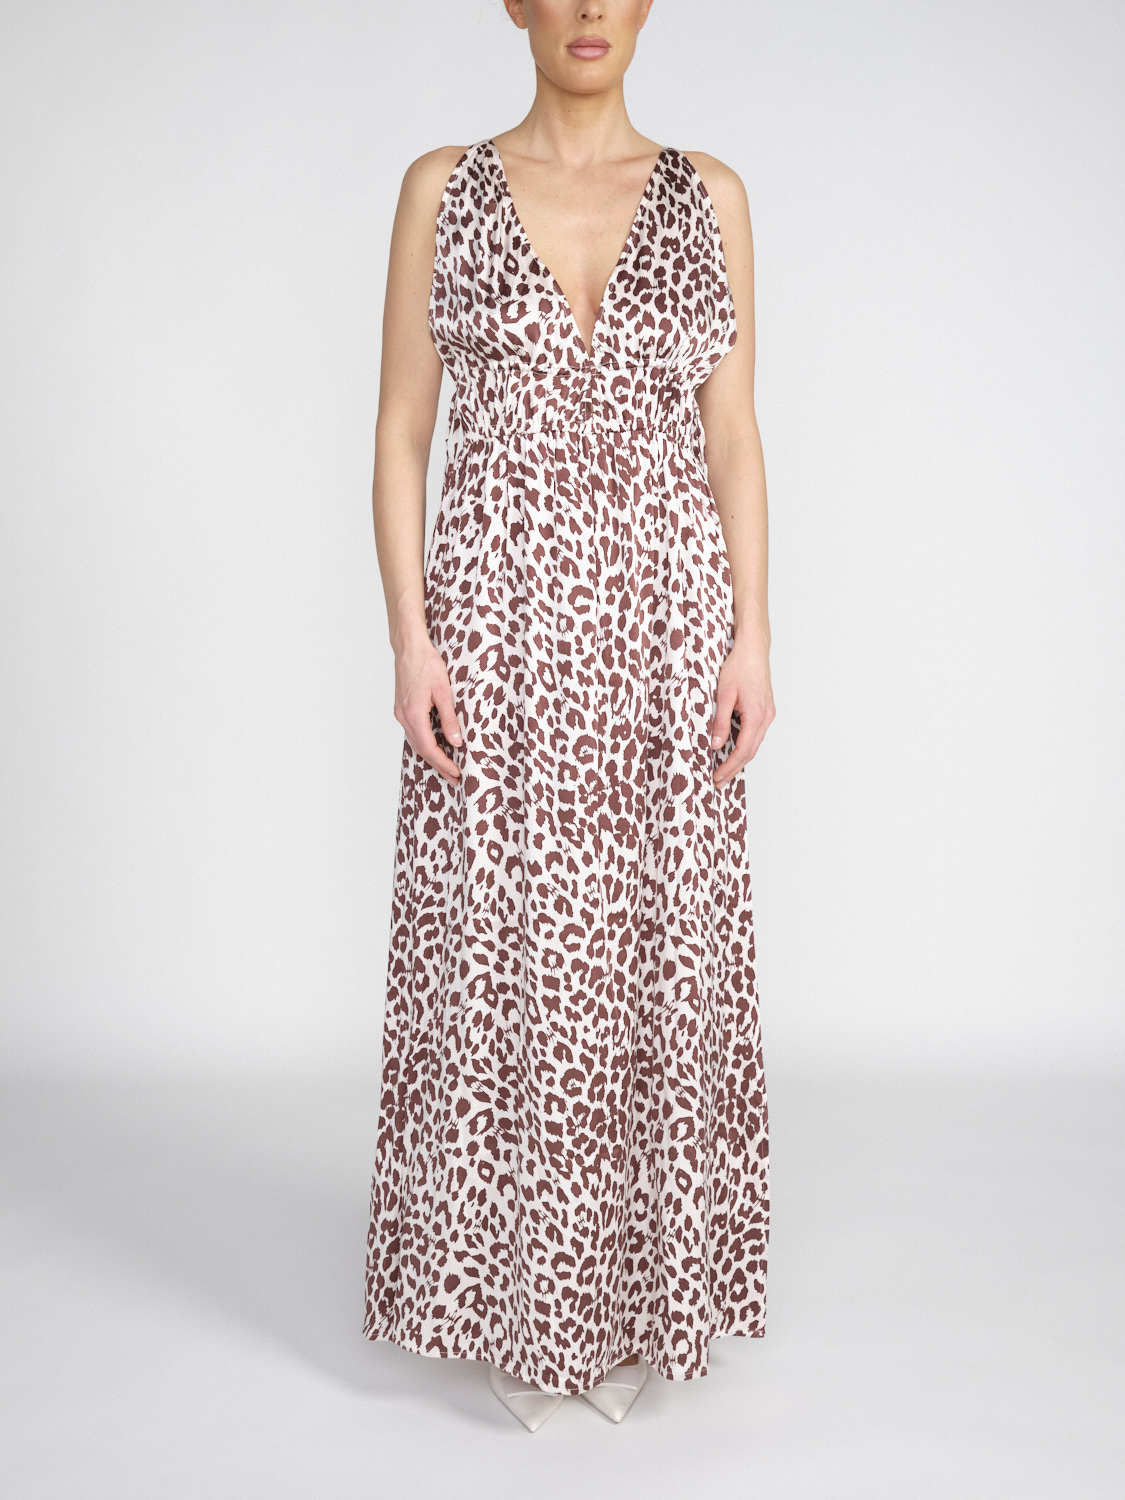 Prontah Cheetah - Silk midi dress with leopard print 